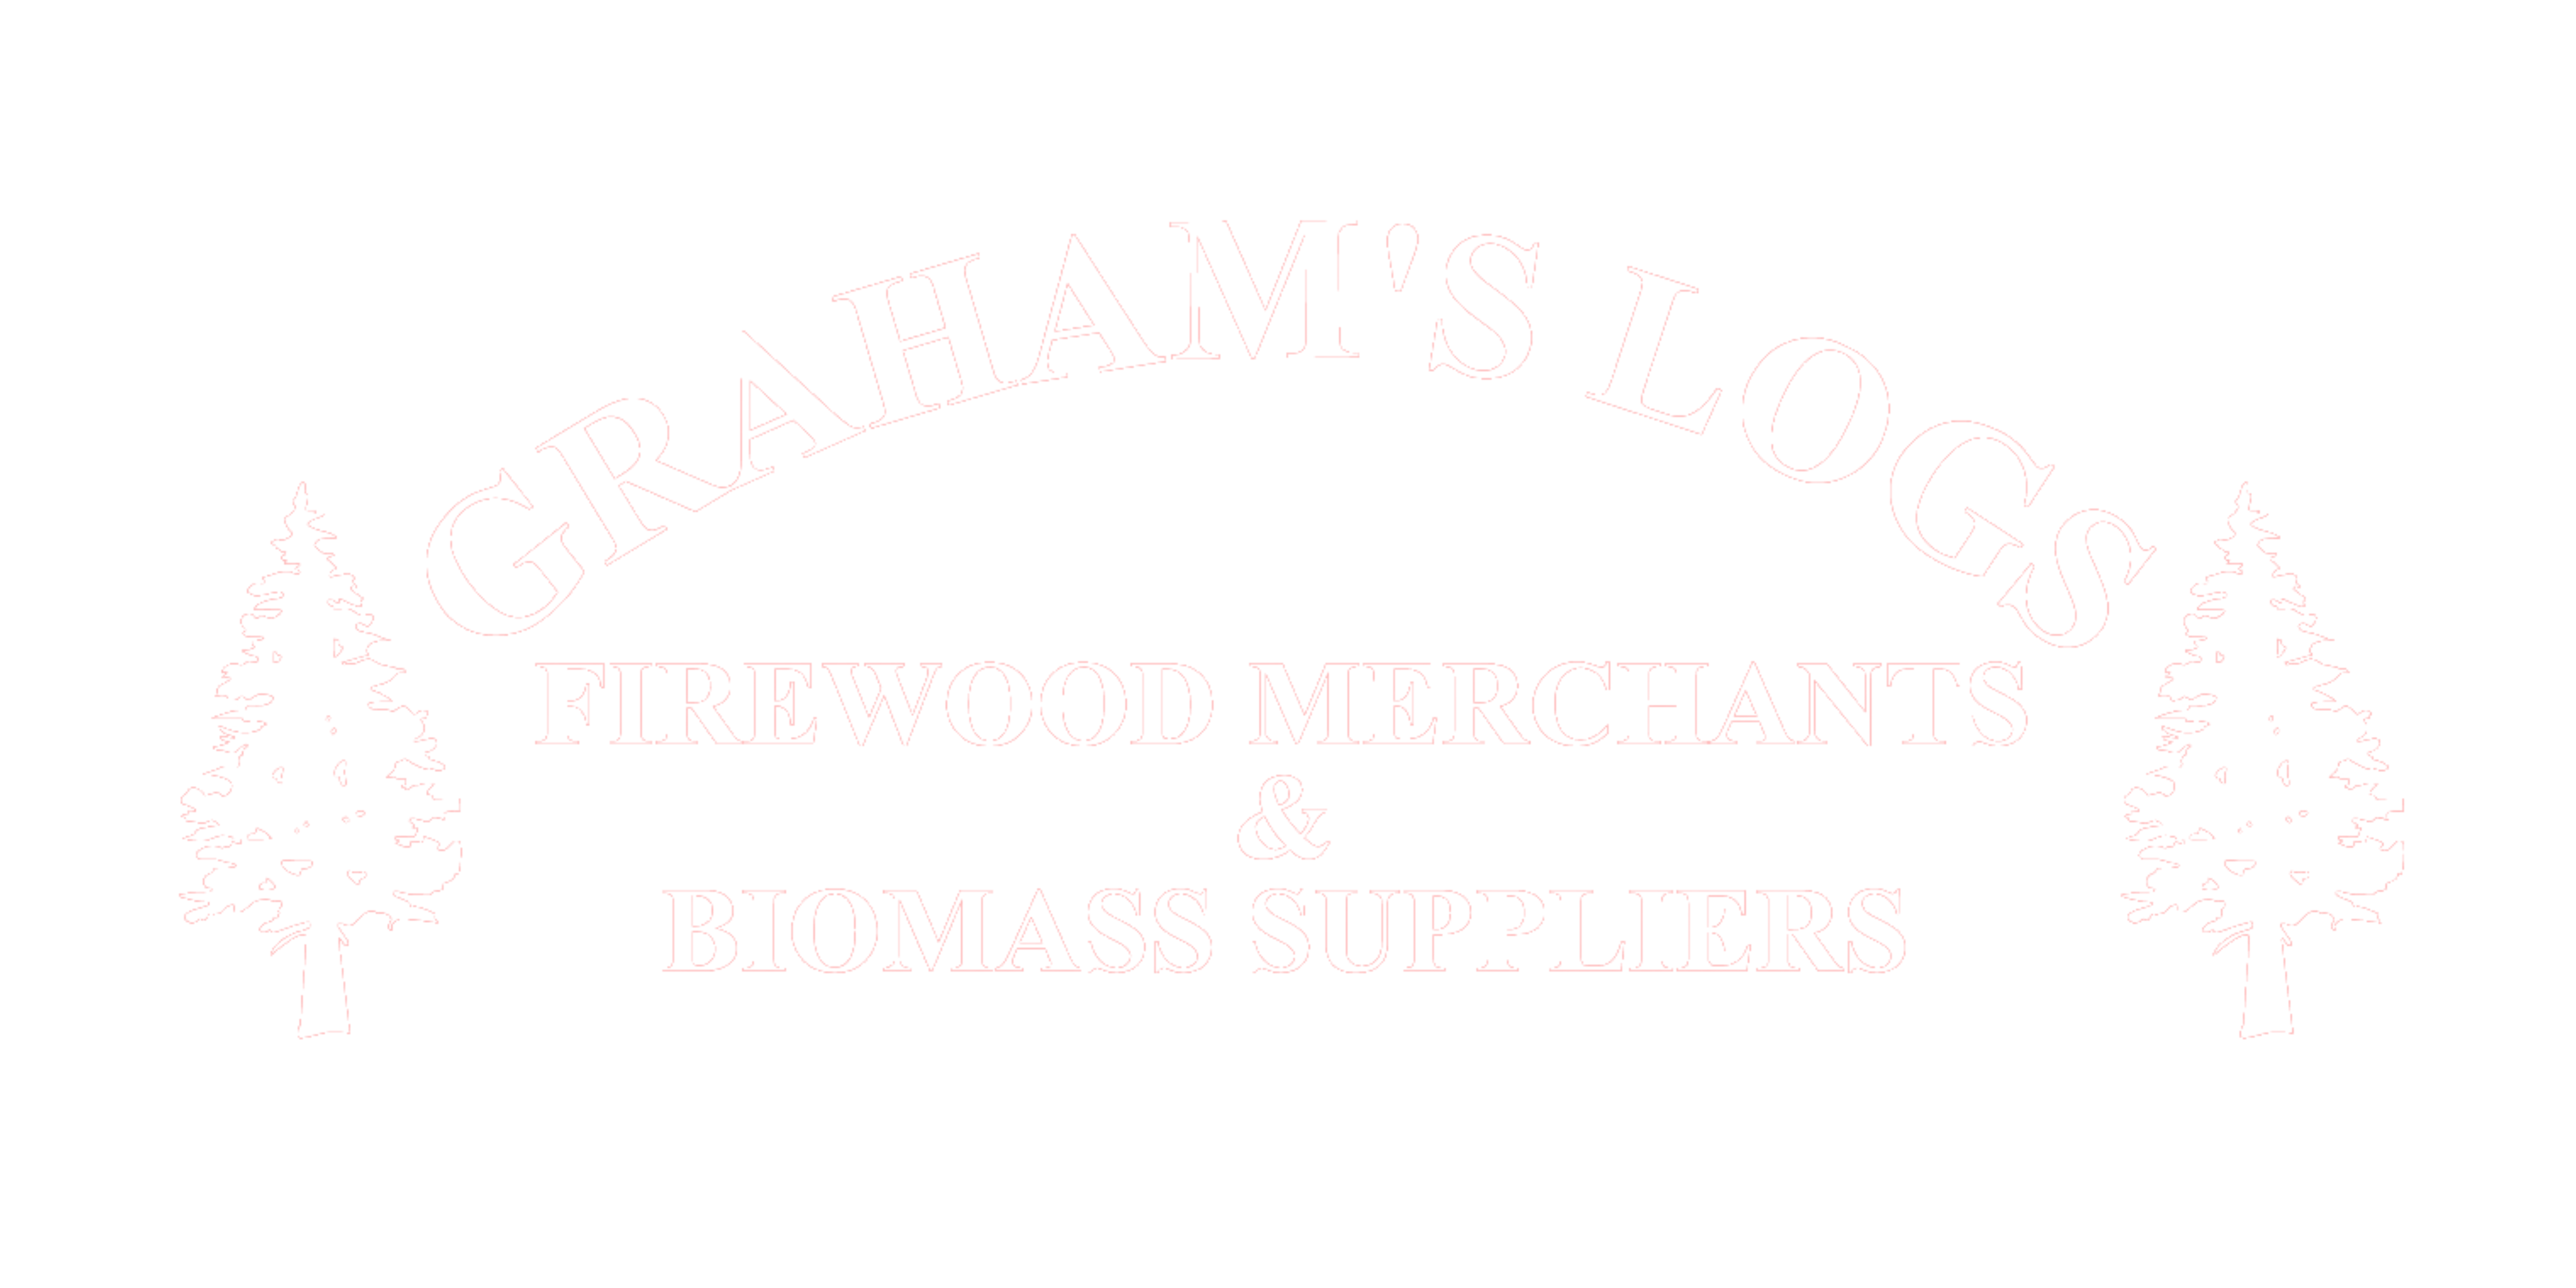 Grahams Logs Logo